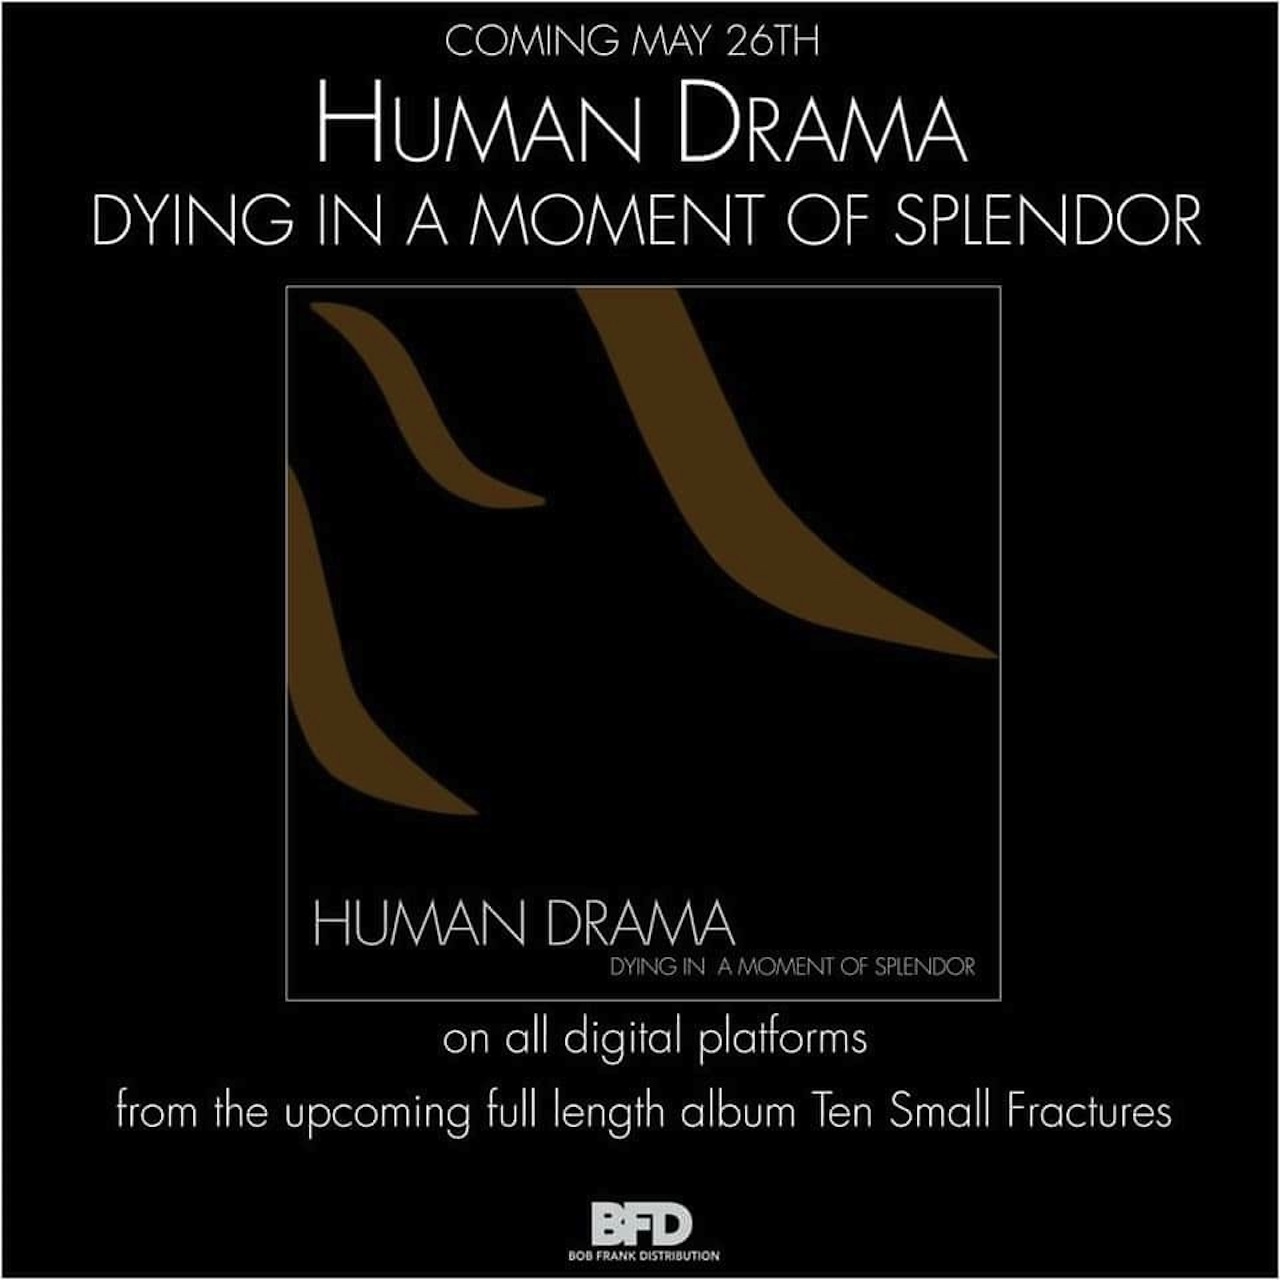 Estreno mundial de Human Drama “Dying in a Moment of Splendor” este 26 de Mayo 2023